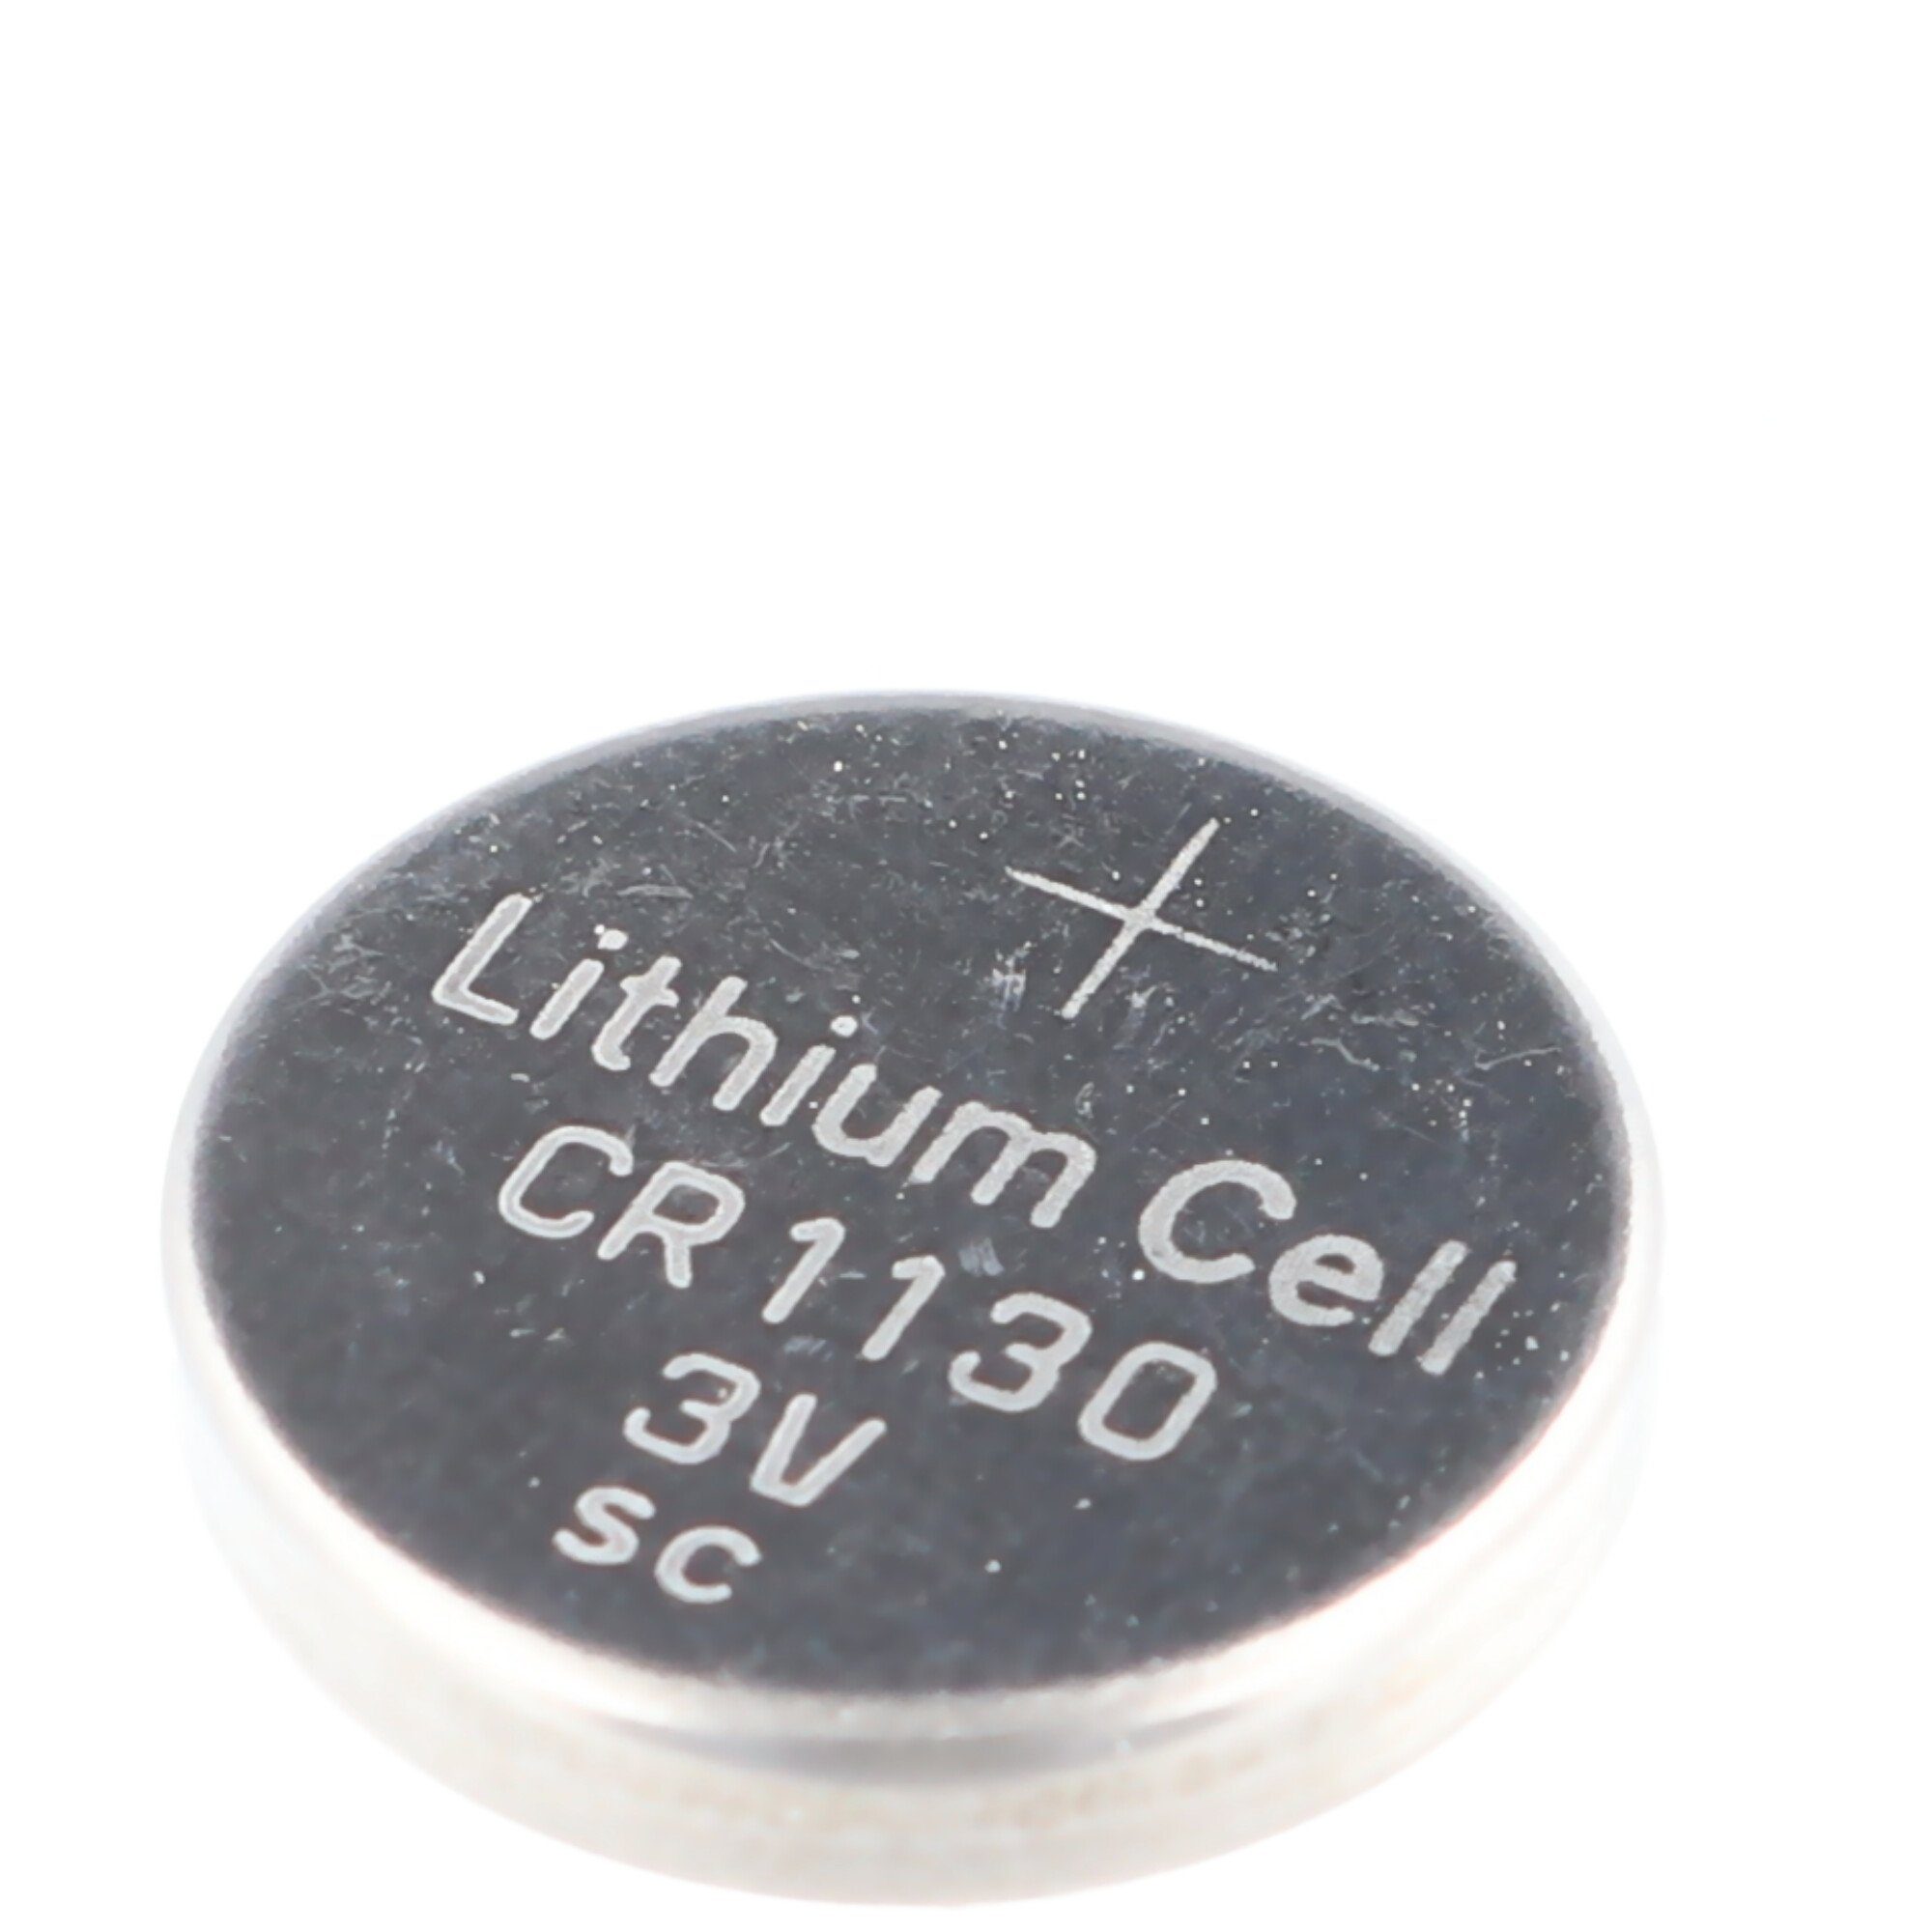 Volt Stück CR1130 Lithium 3,0 Batterie Batterie, 3 Volt 1 Battery CR1130 V) AccuCell (3,0